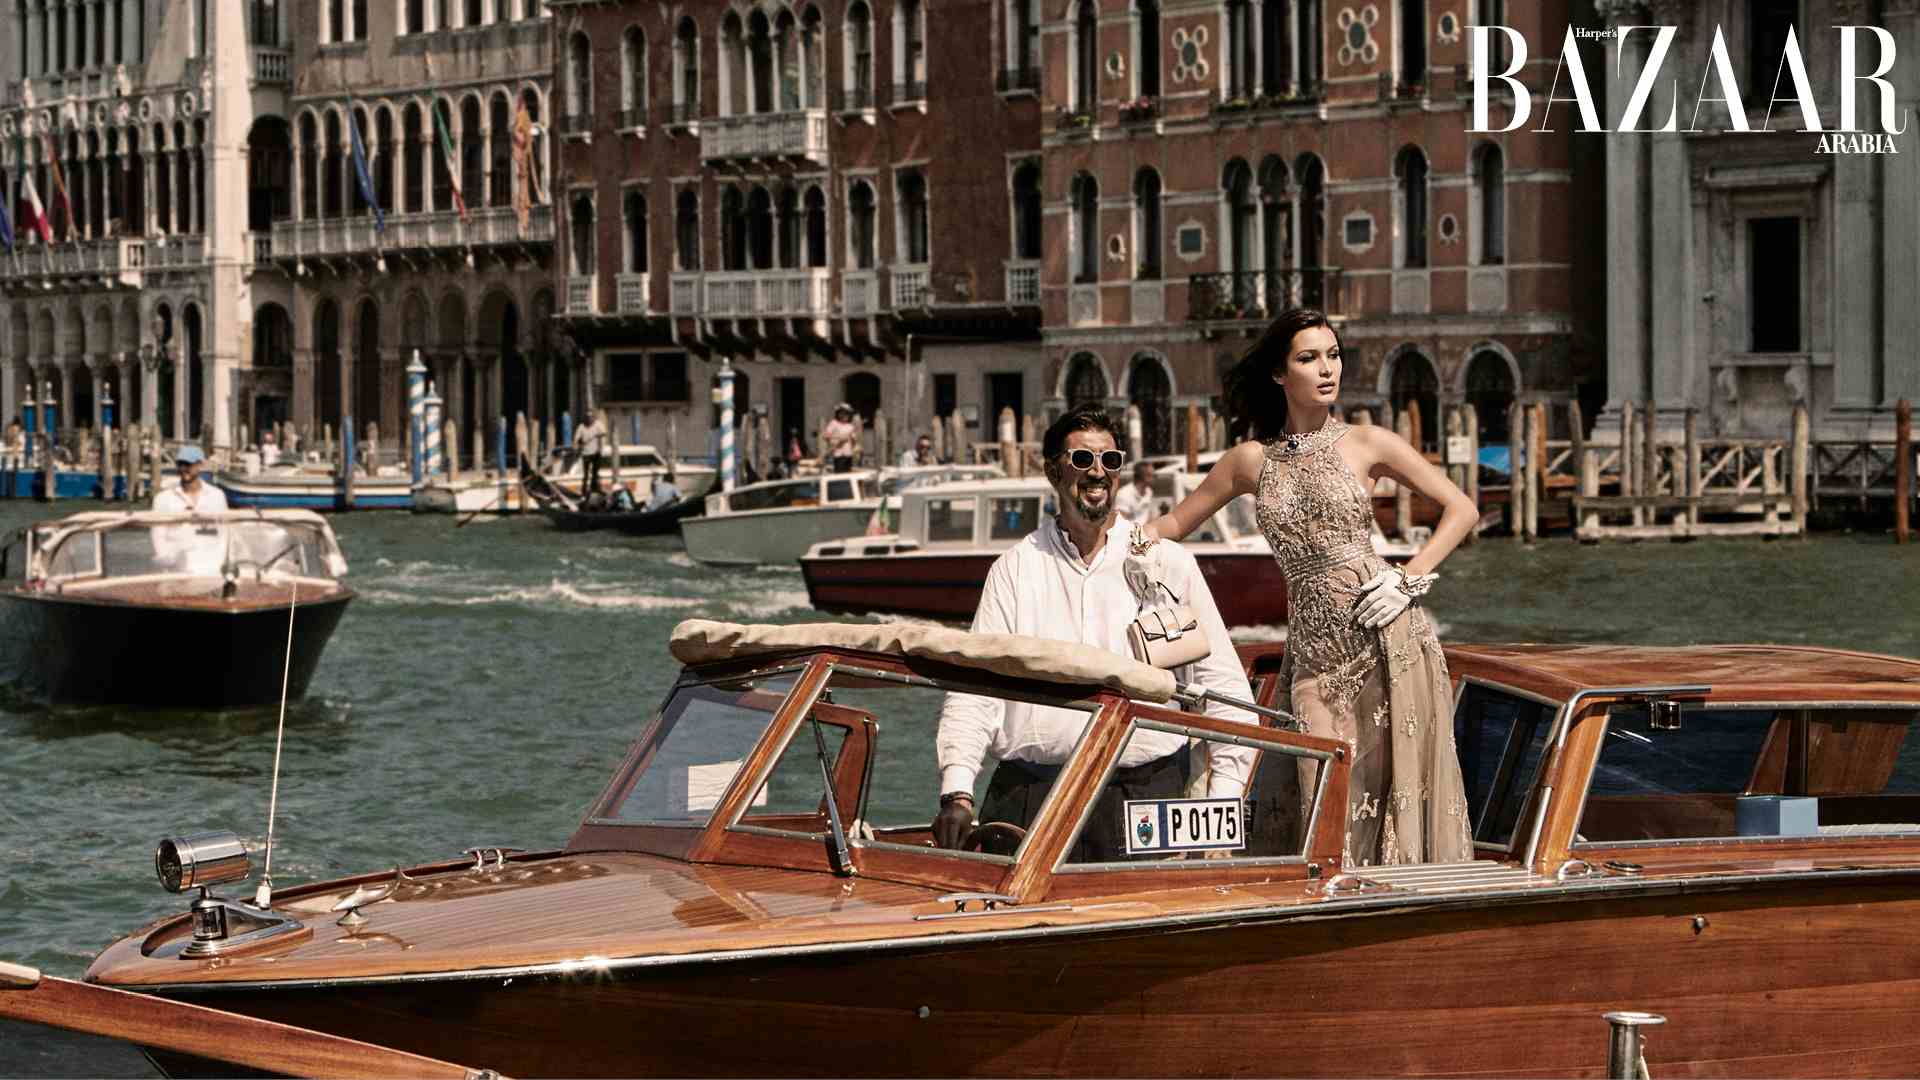 HARPER'S BAZAAR ARABIA - October 2017
Photographer: Victor Demarchelier
Model: Bella Hadid
Stylist: Anna Castan
Location: Venice, Italy